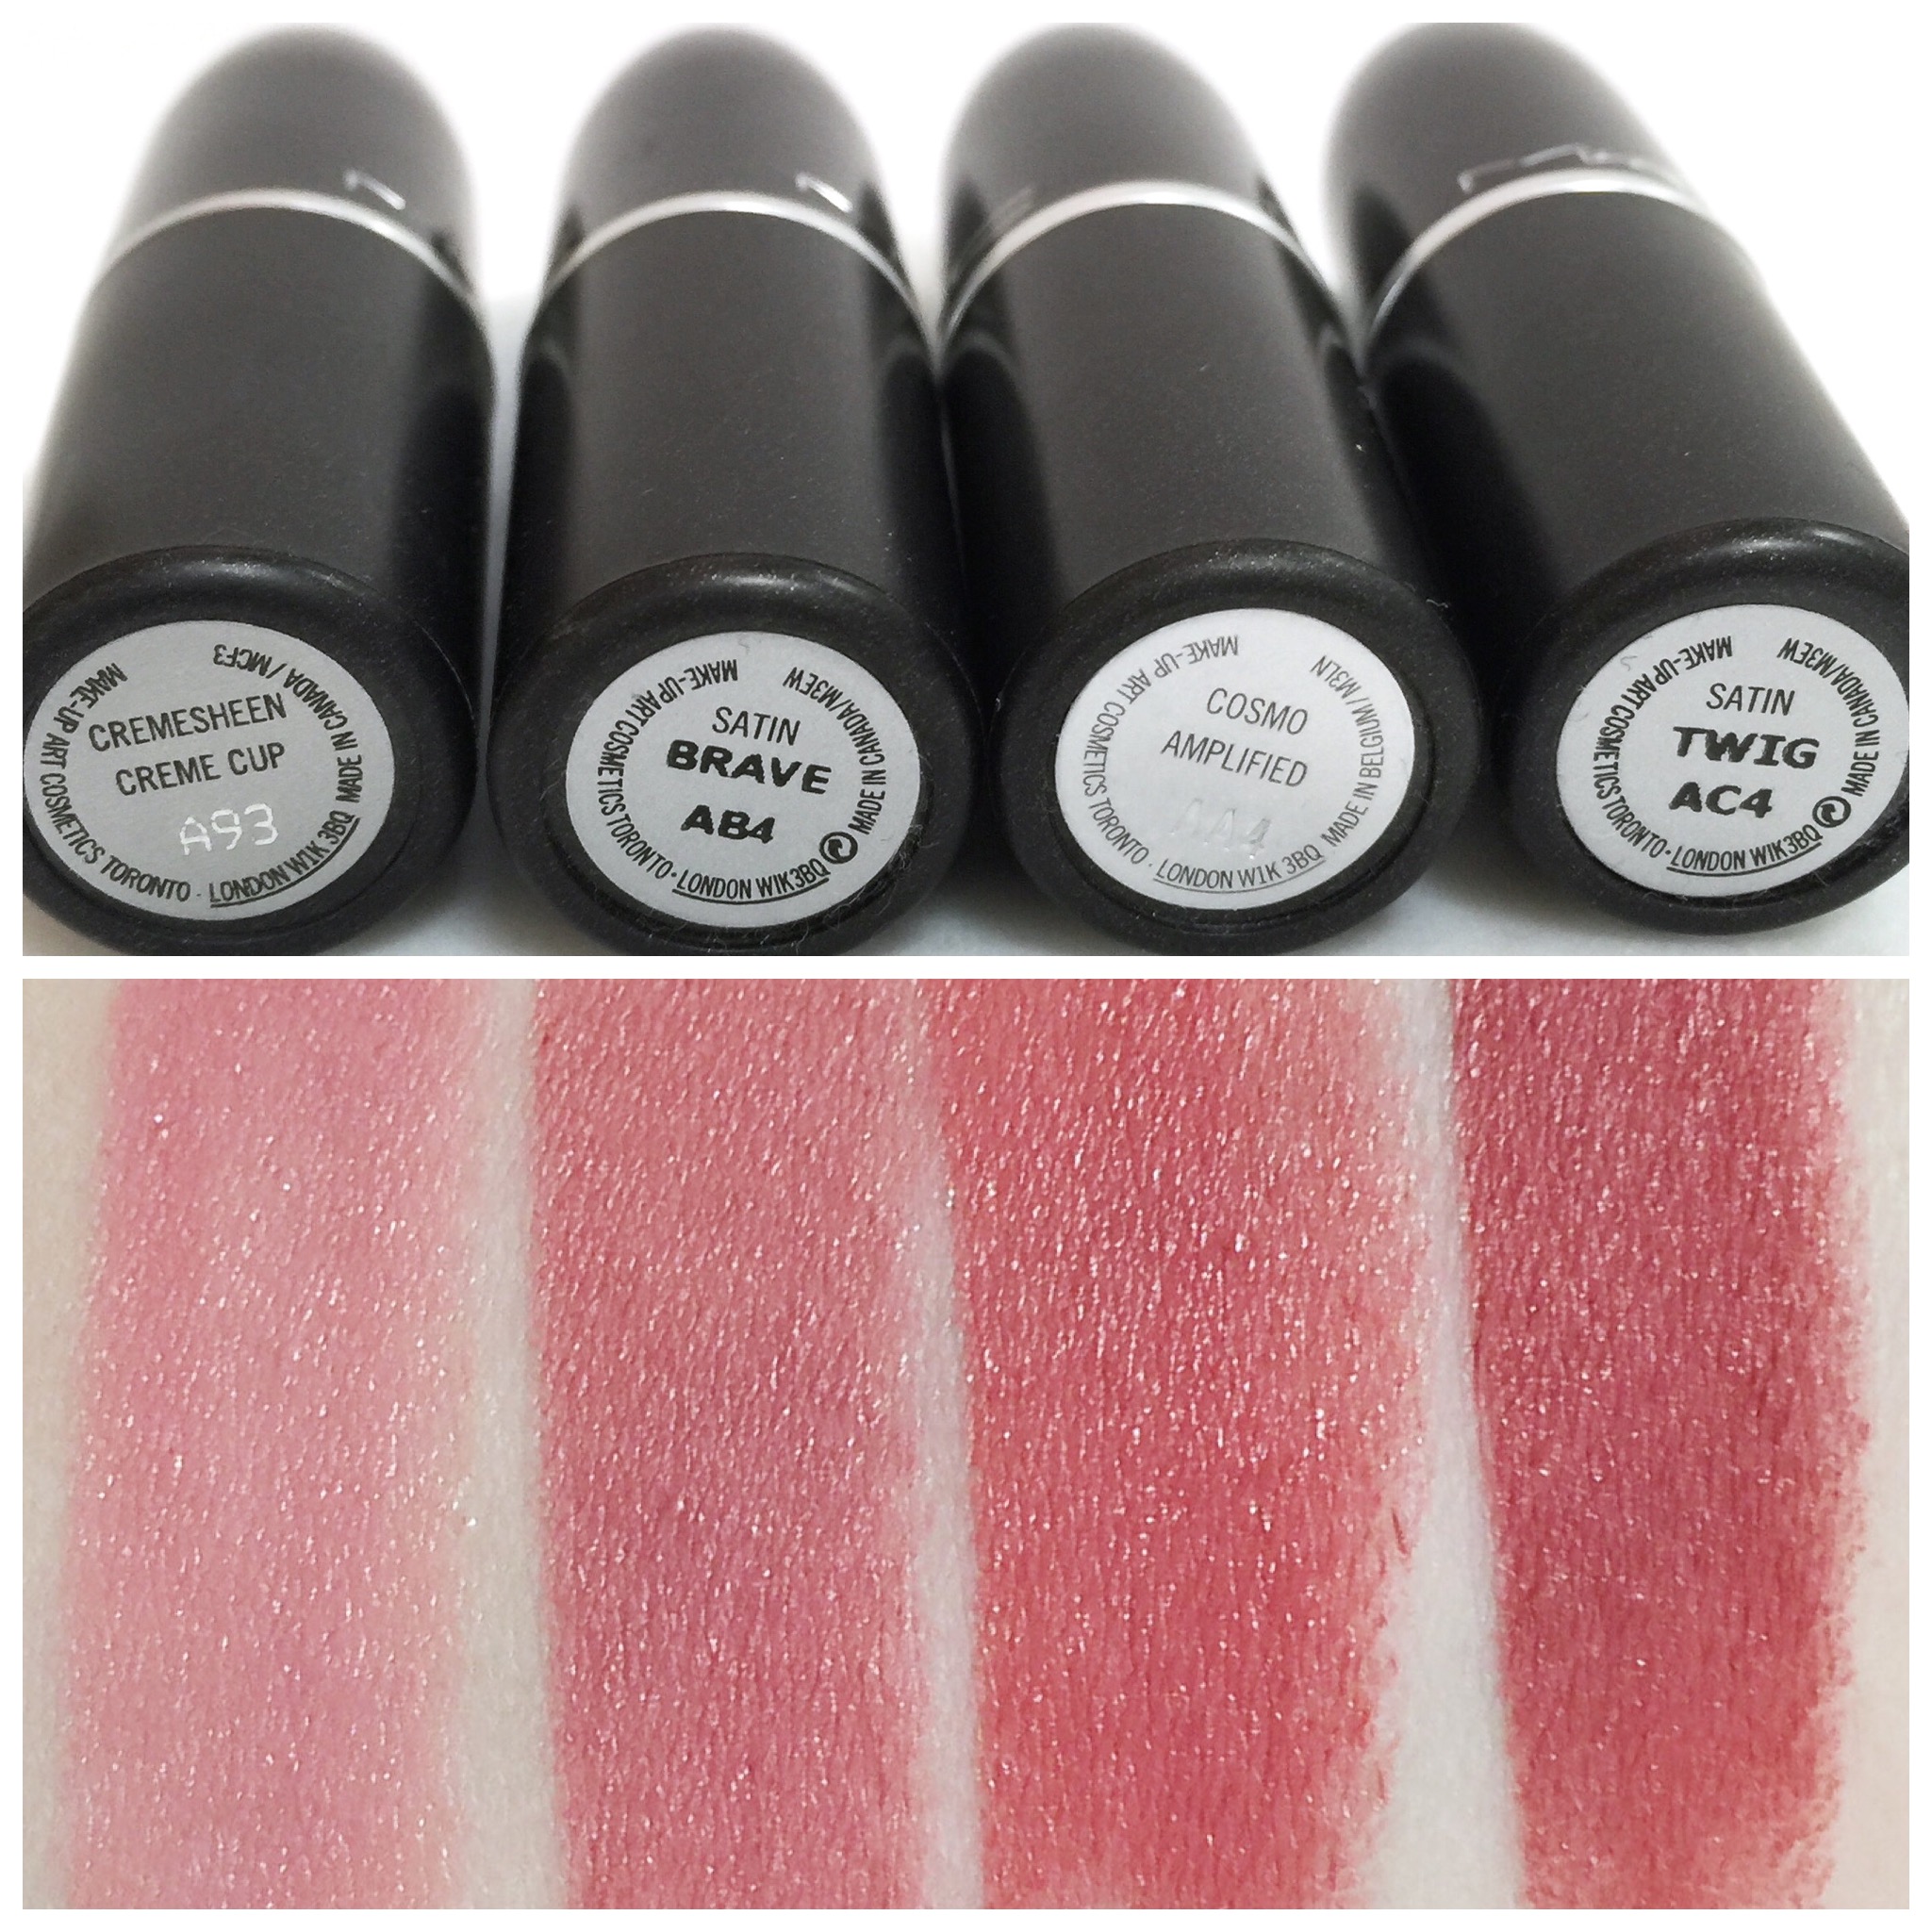 mac lipstick shades with price